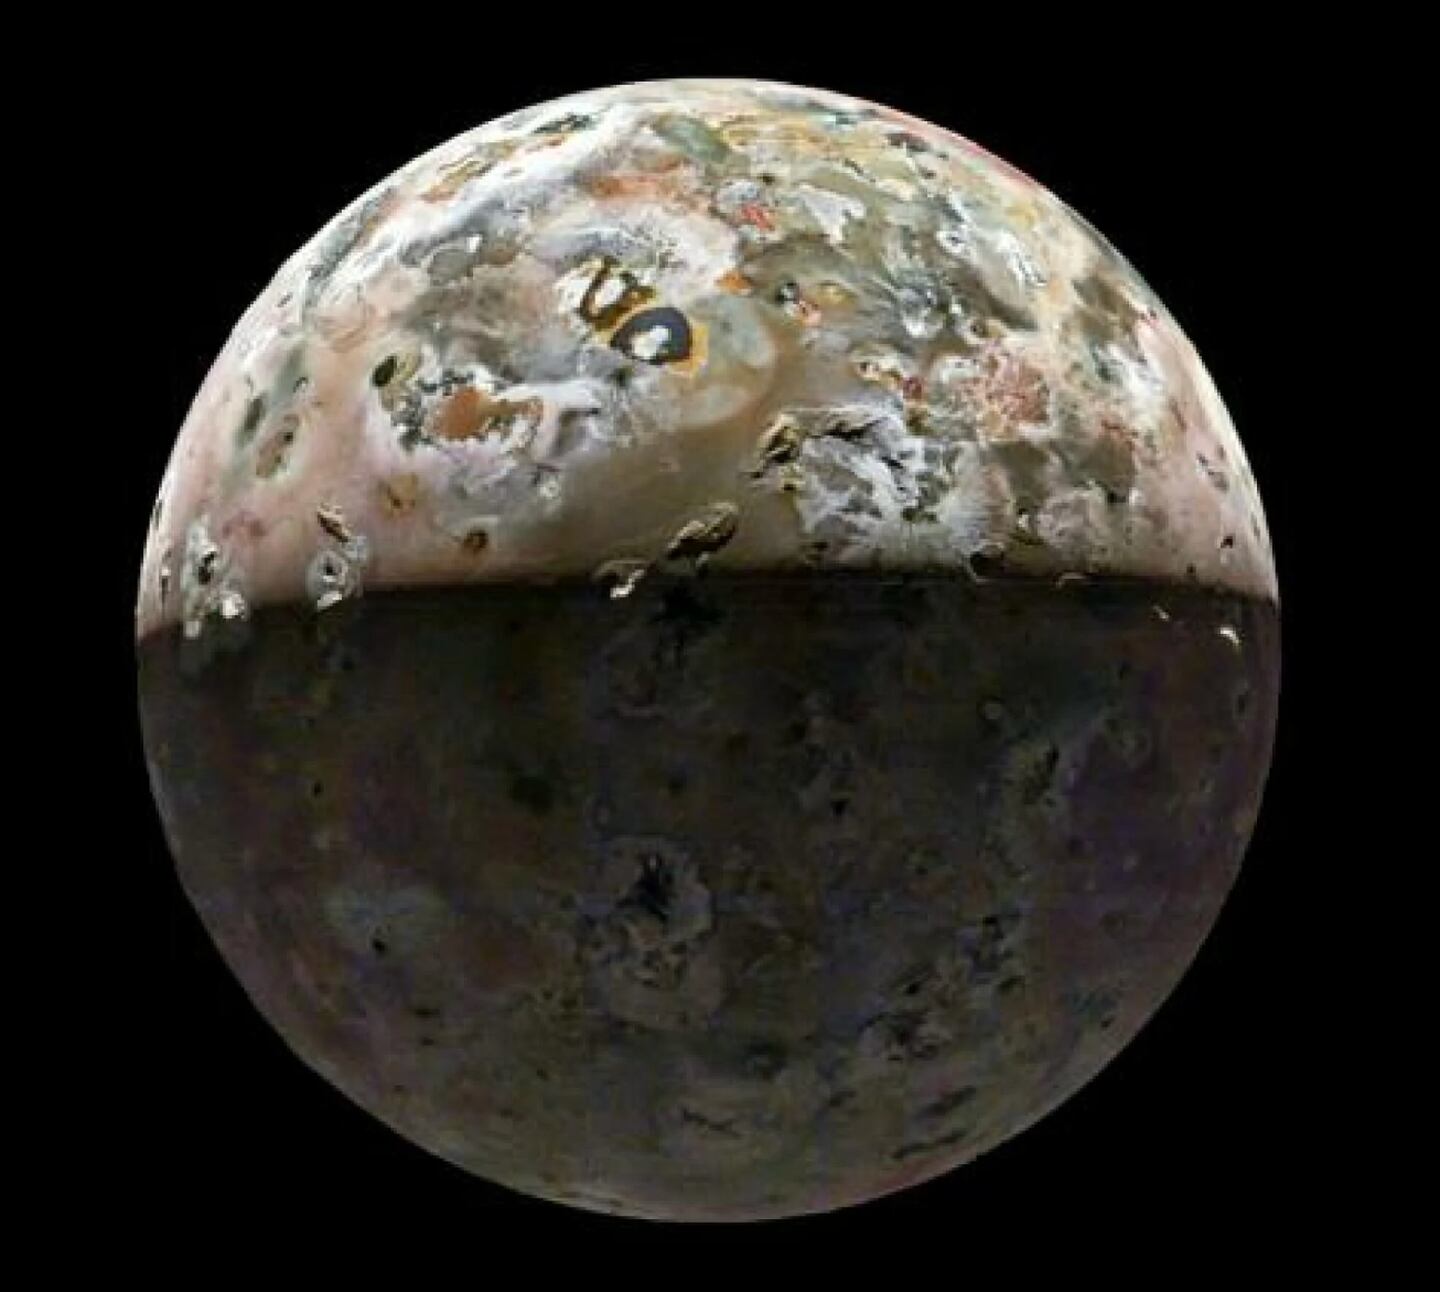 Luna Ío | Crédito: NASA / JPL / SwRI / MSSS / Gerald Eichstädt / Thomas Thomopoulos CC BY 3.0 Unported